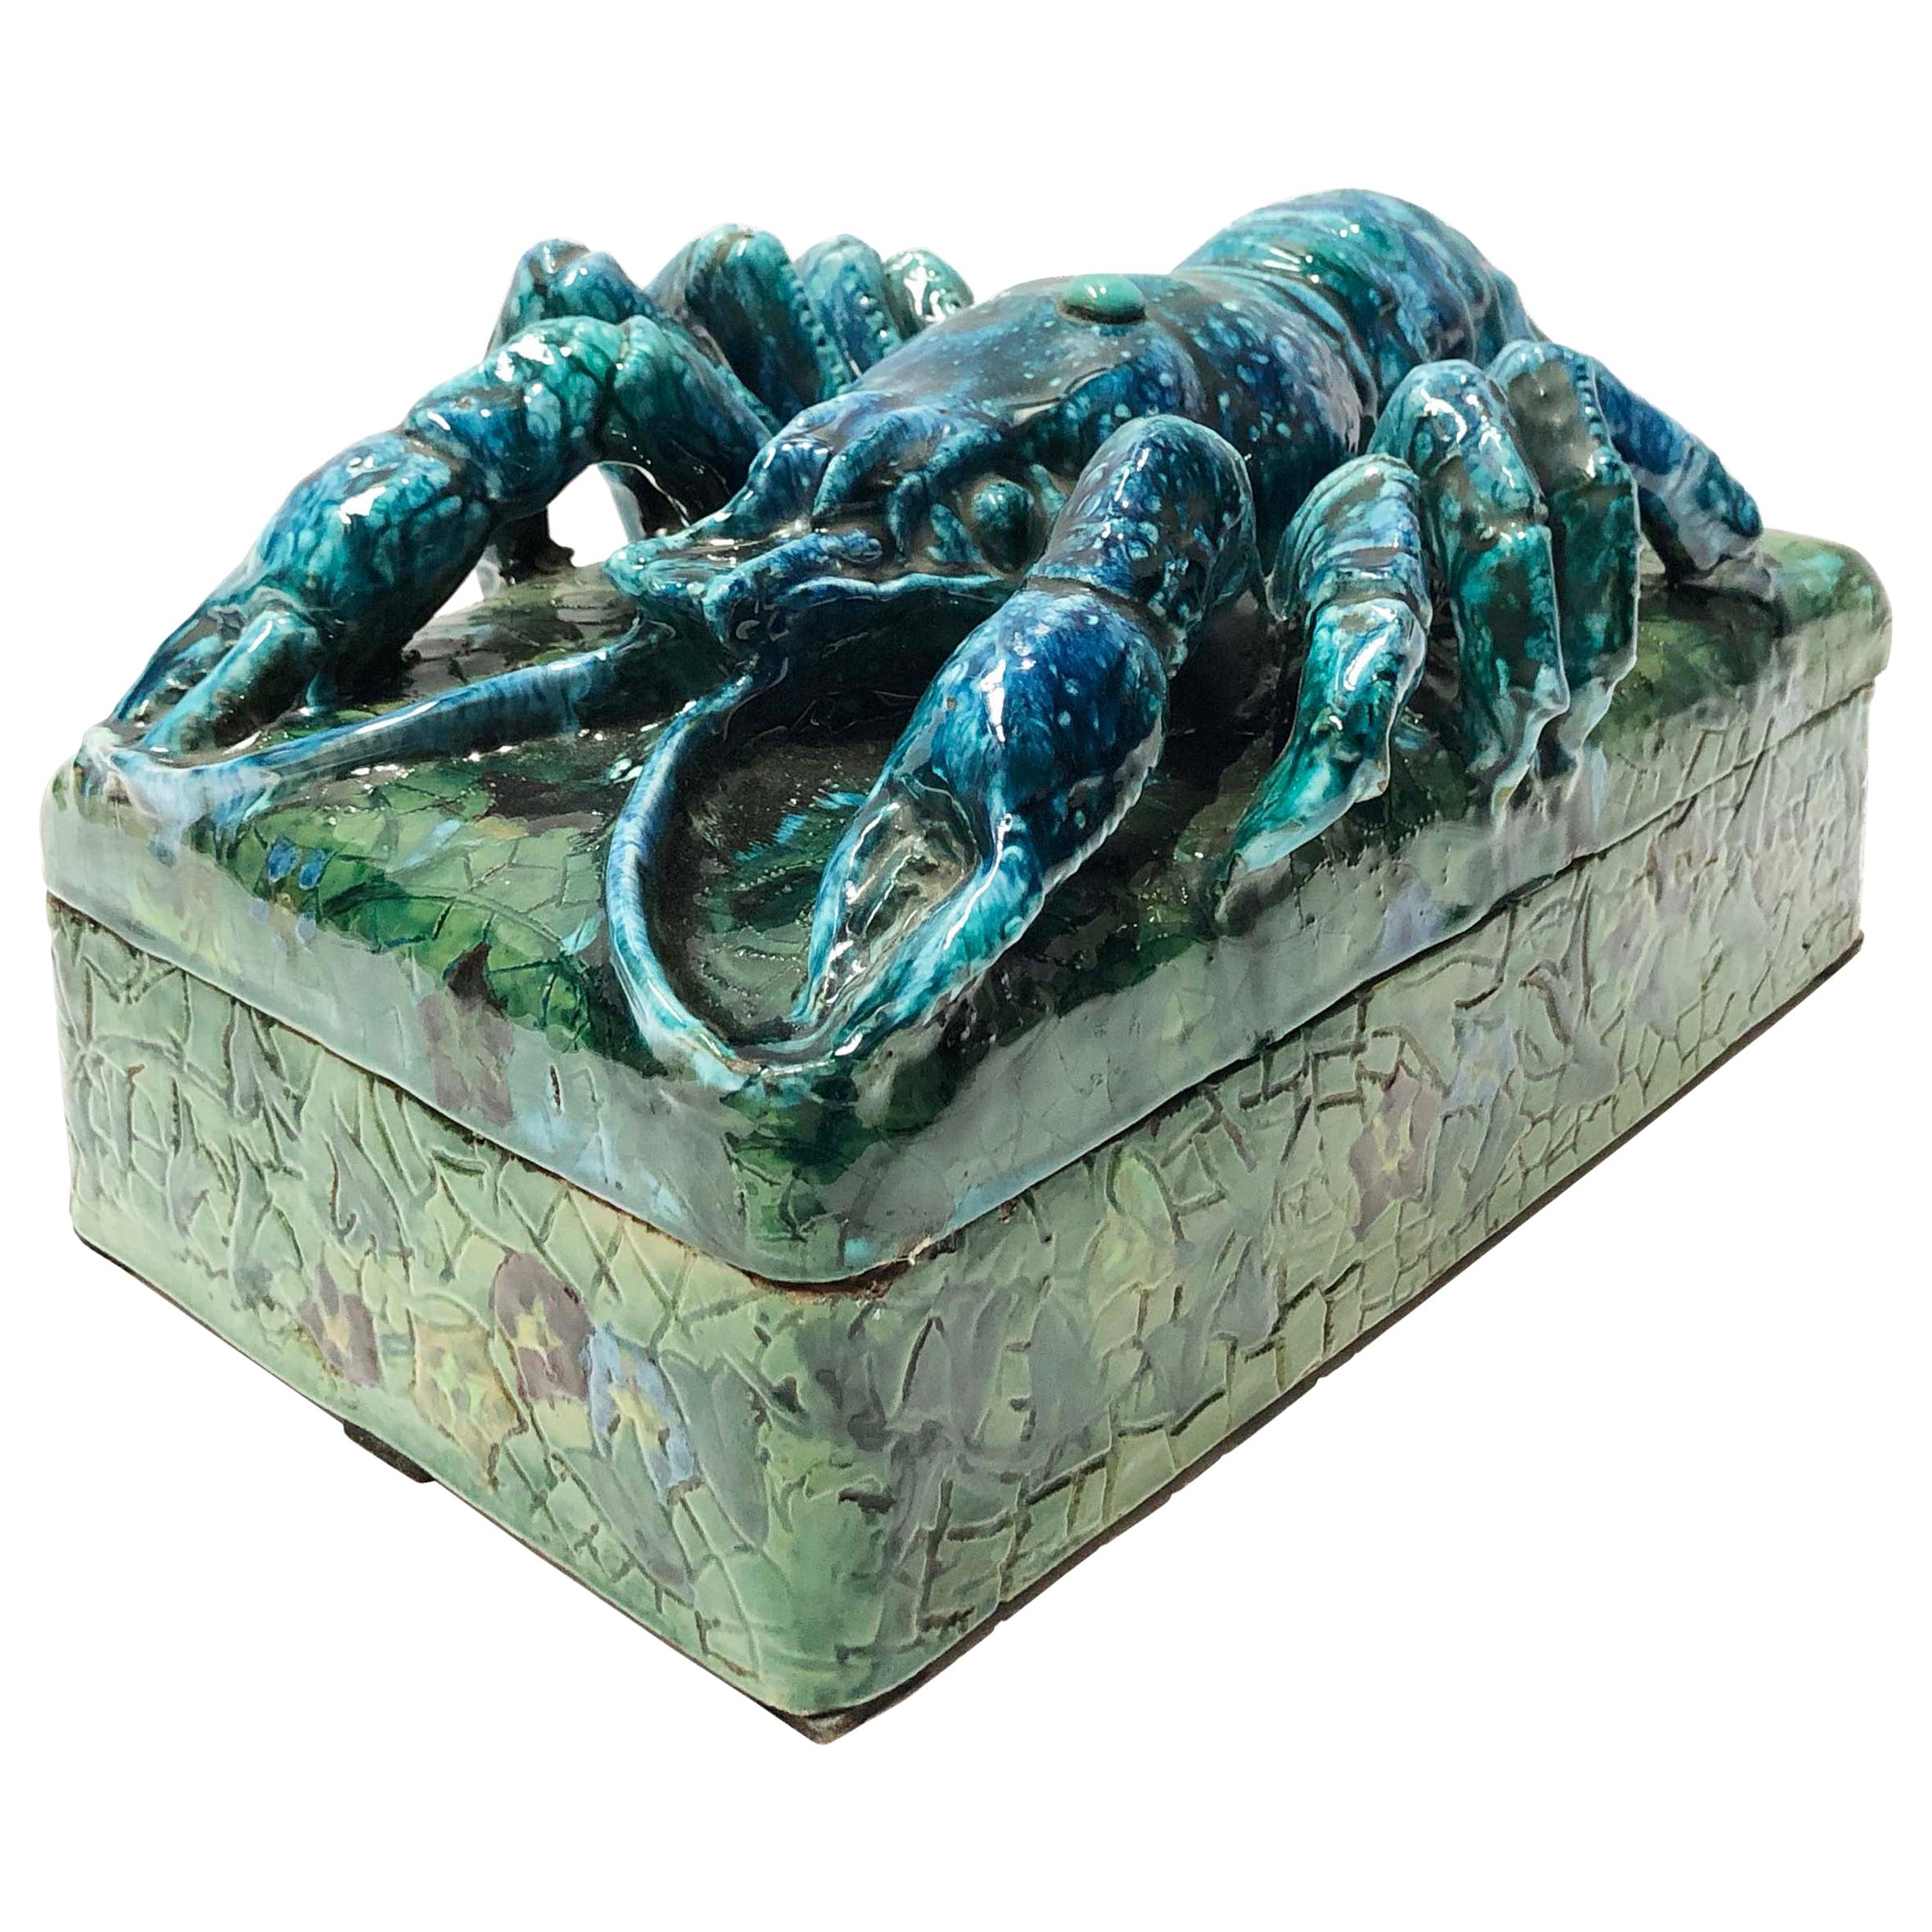 Enamel Ceramic Lobster Box, Art Nouveau Period, France, circa 1900